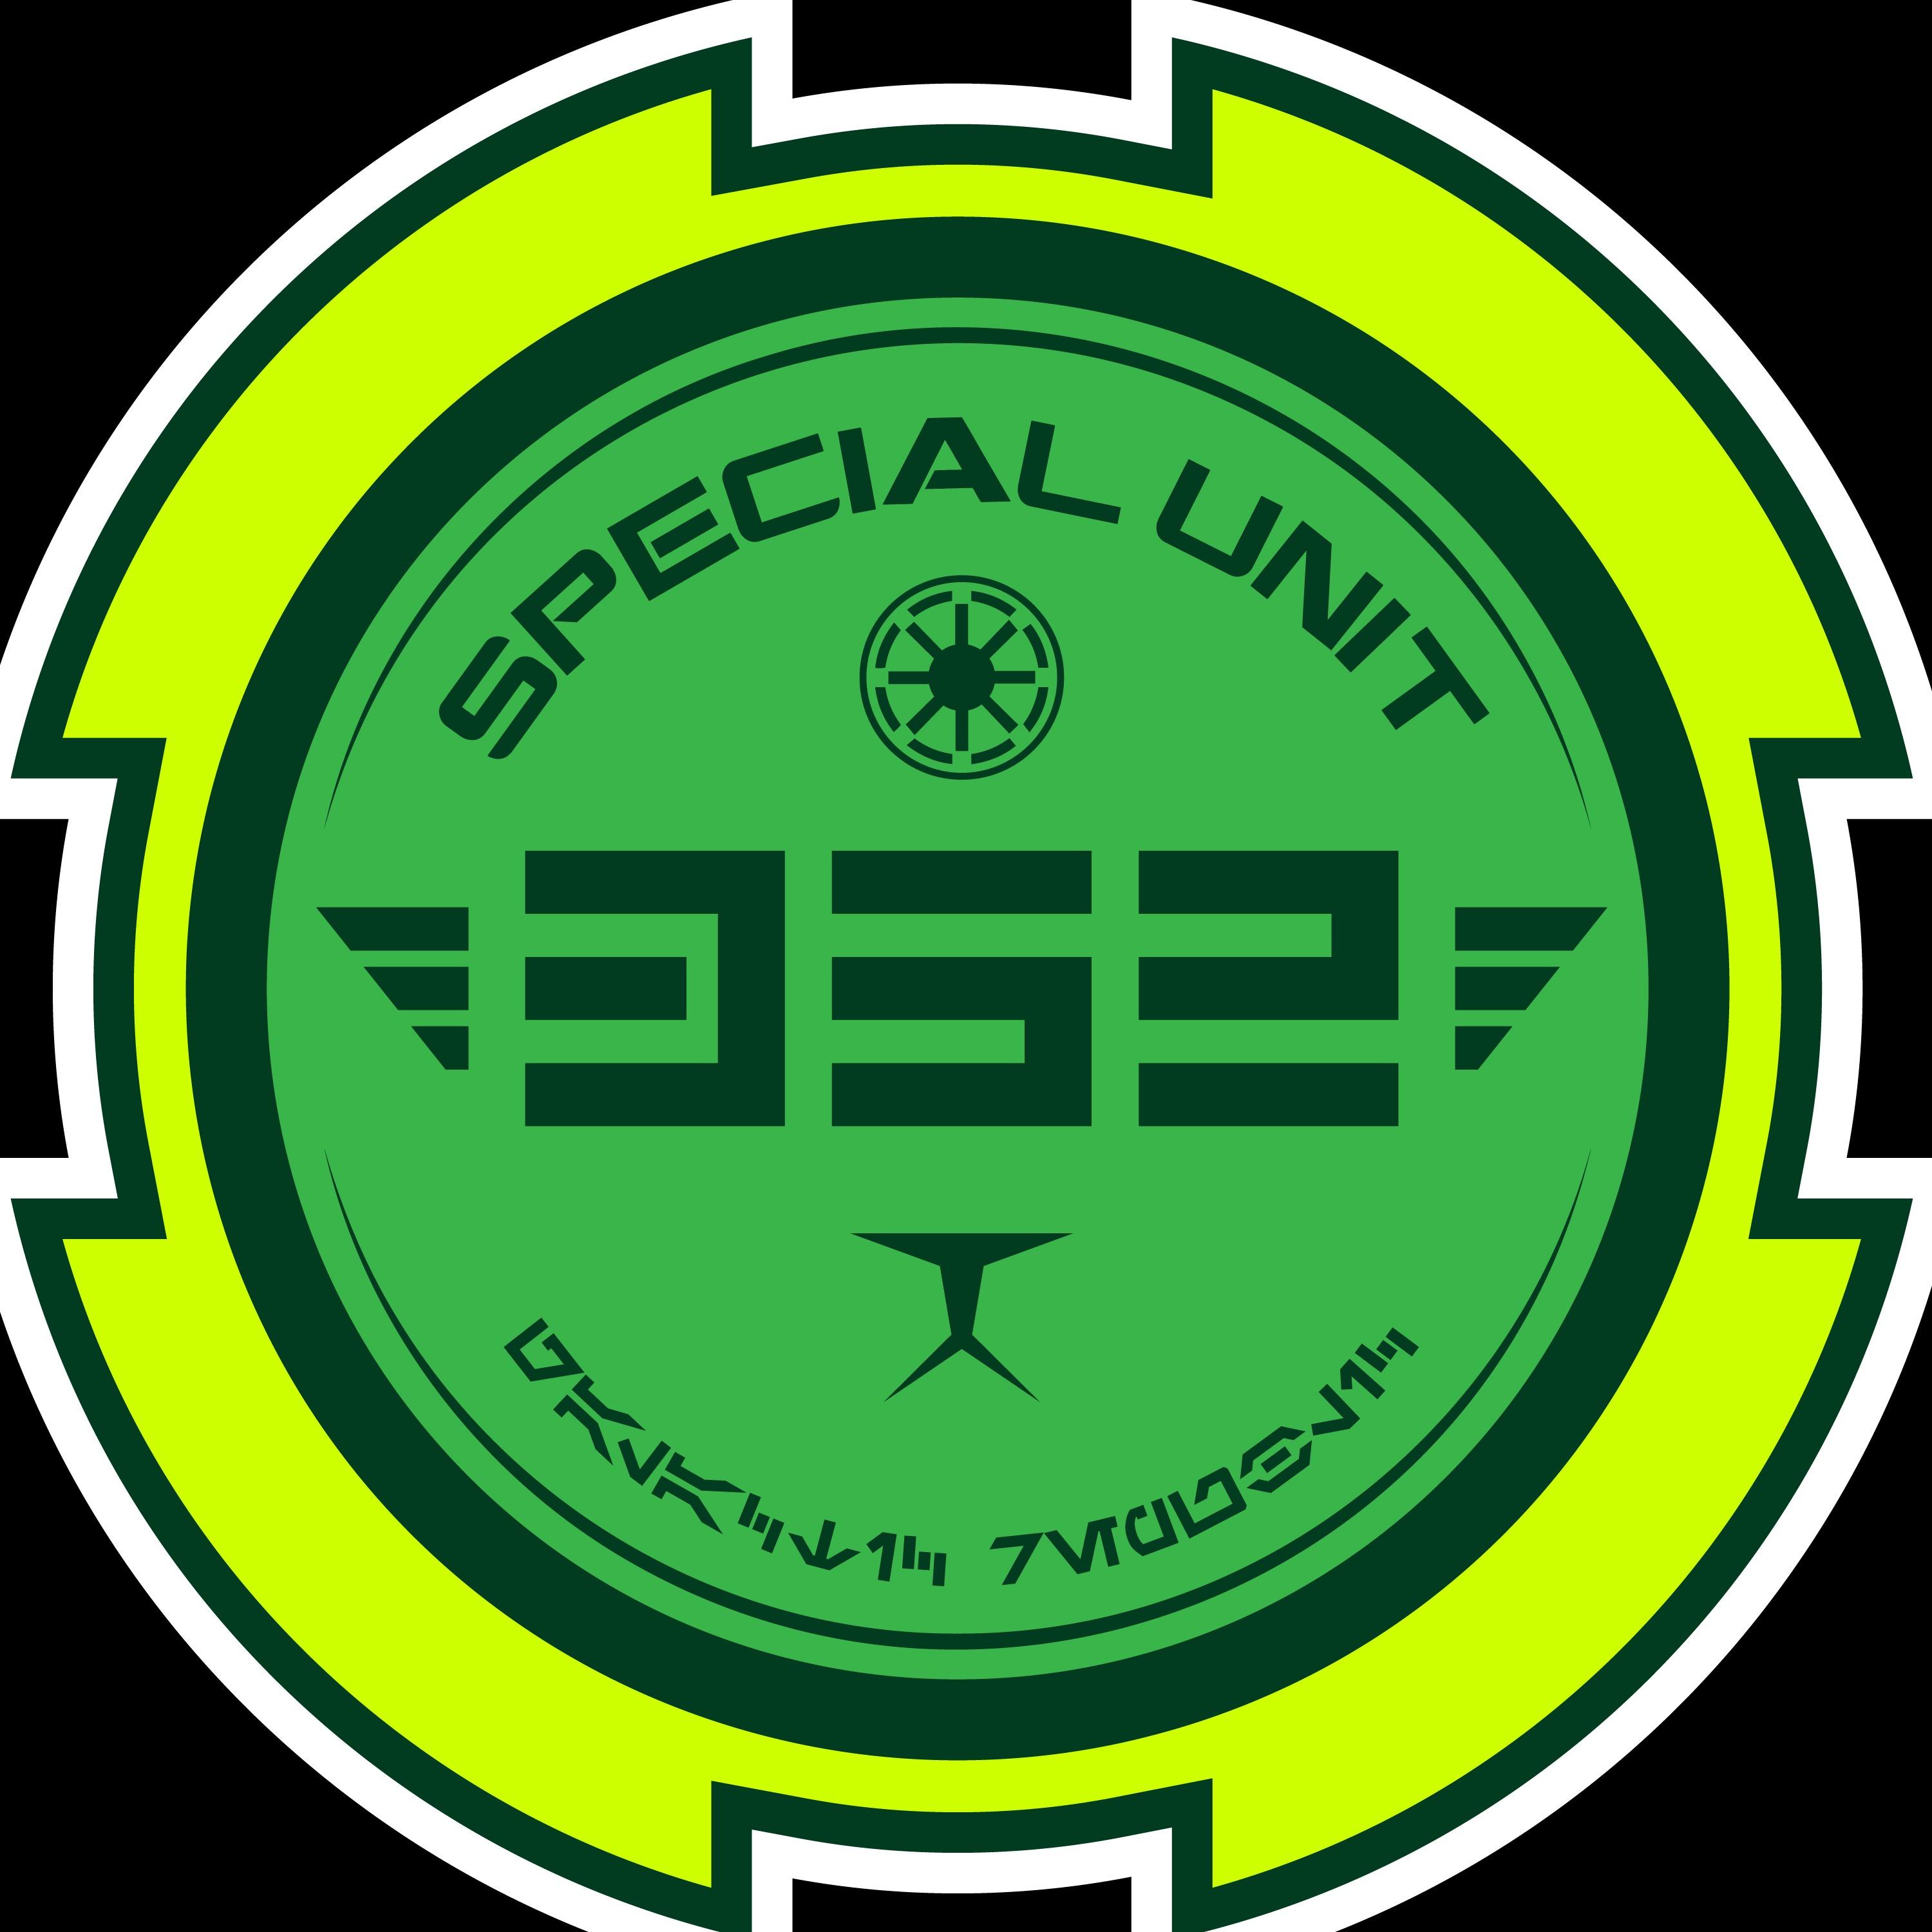 Star Wars Special Unit 352